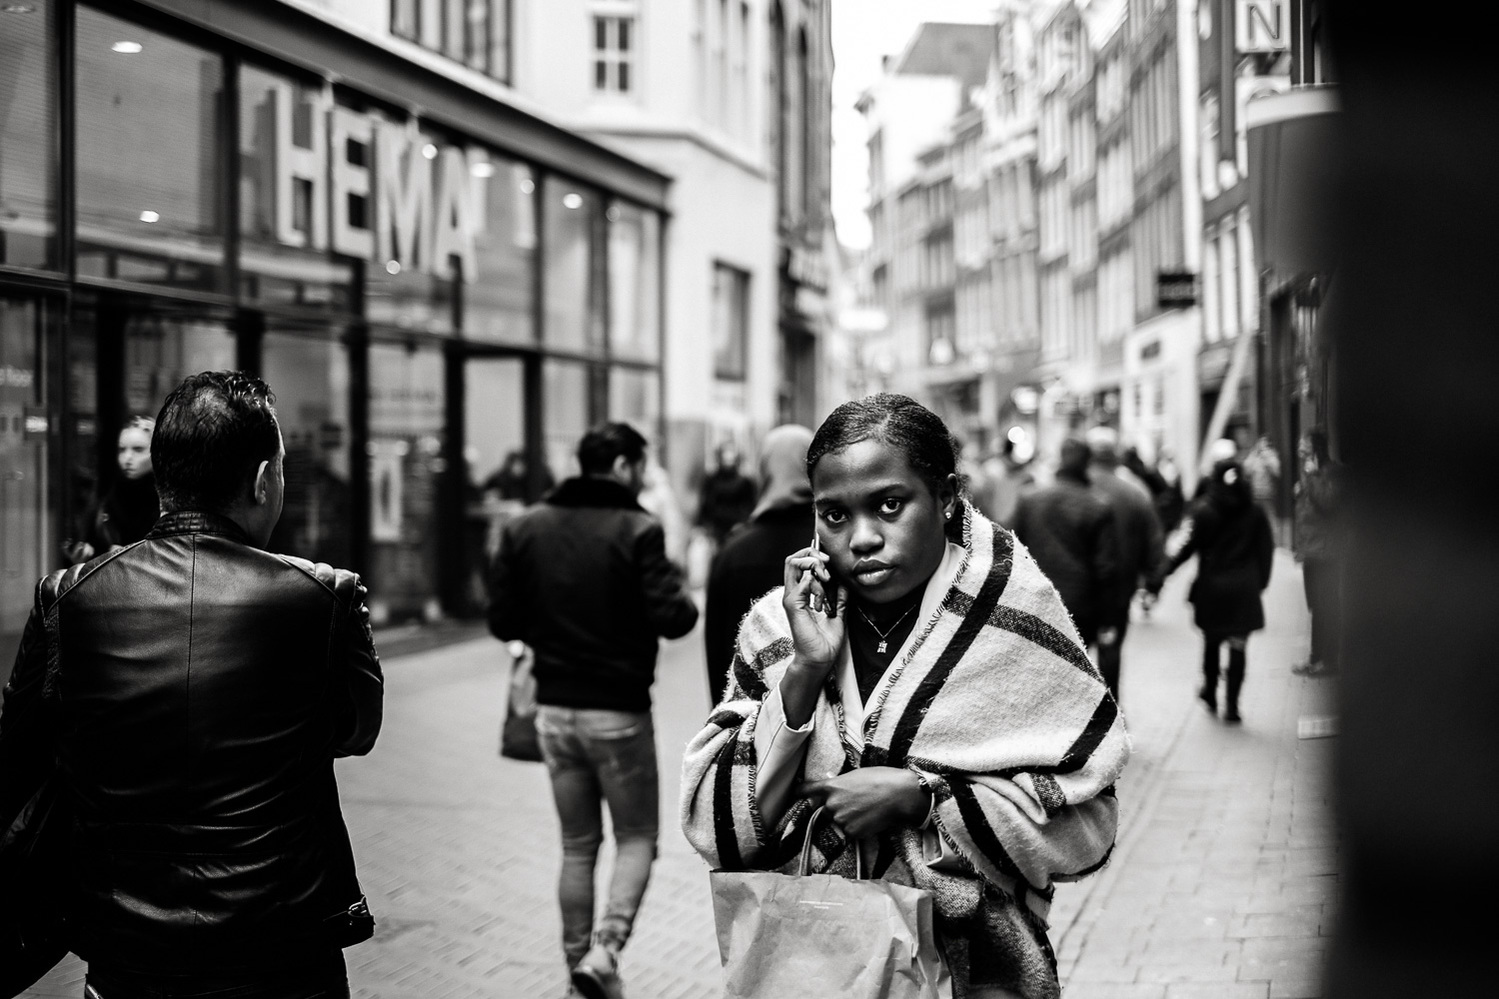 Street Photography Amsterdam